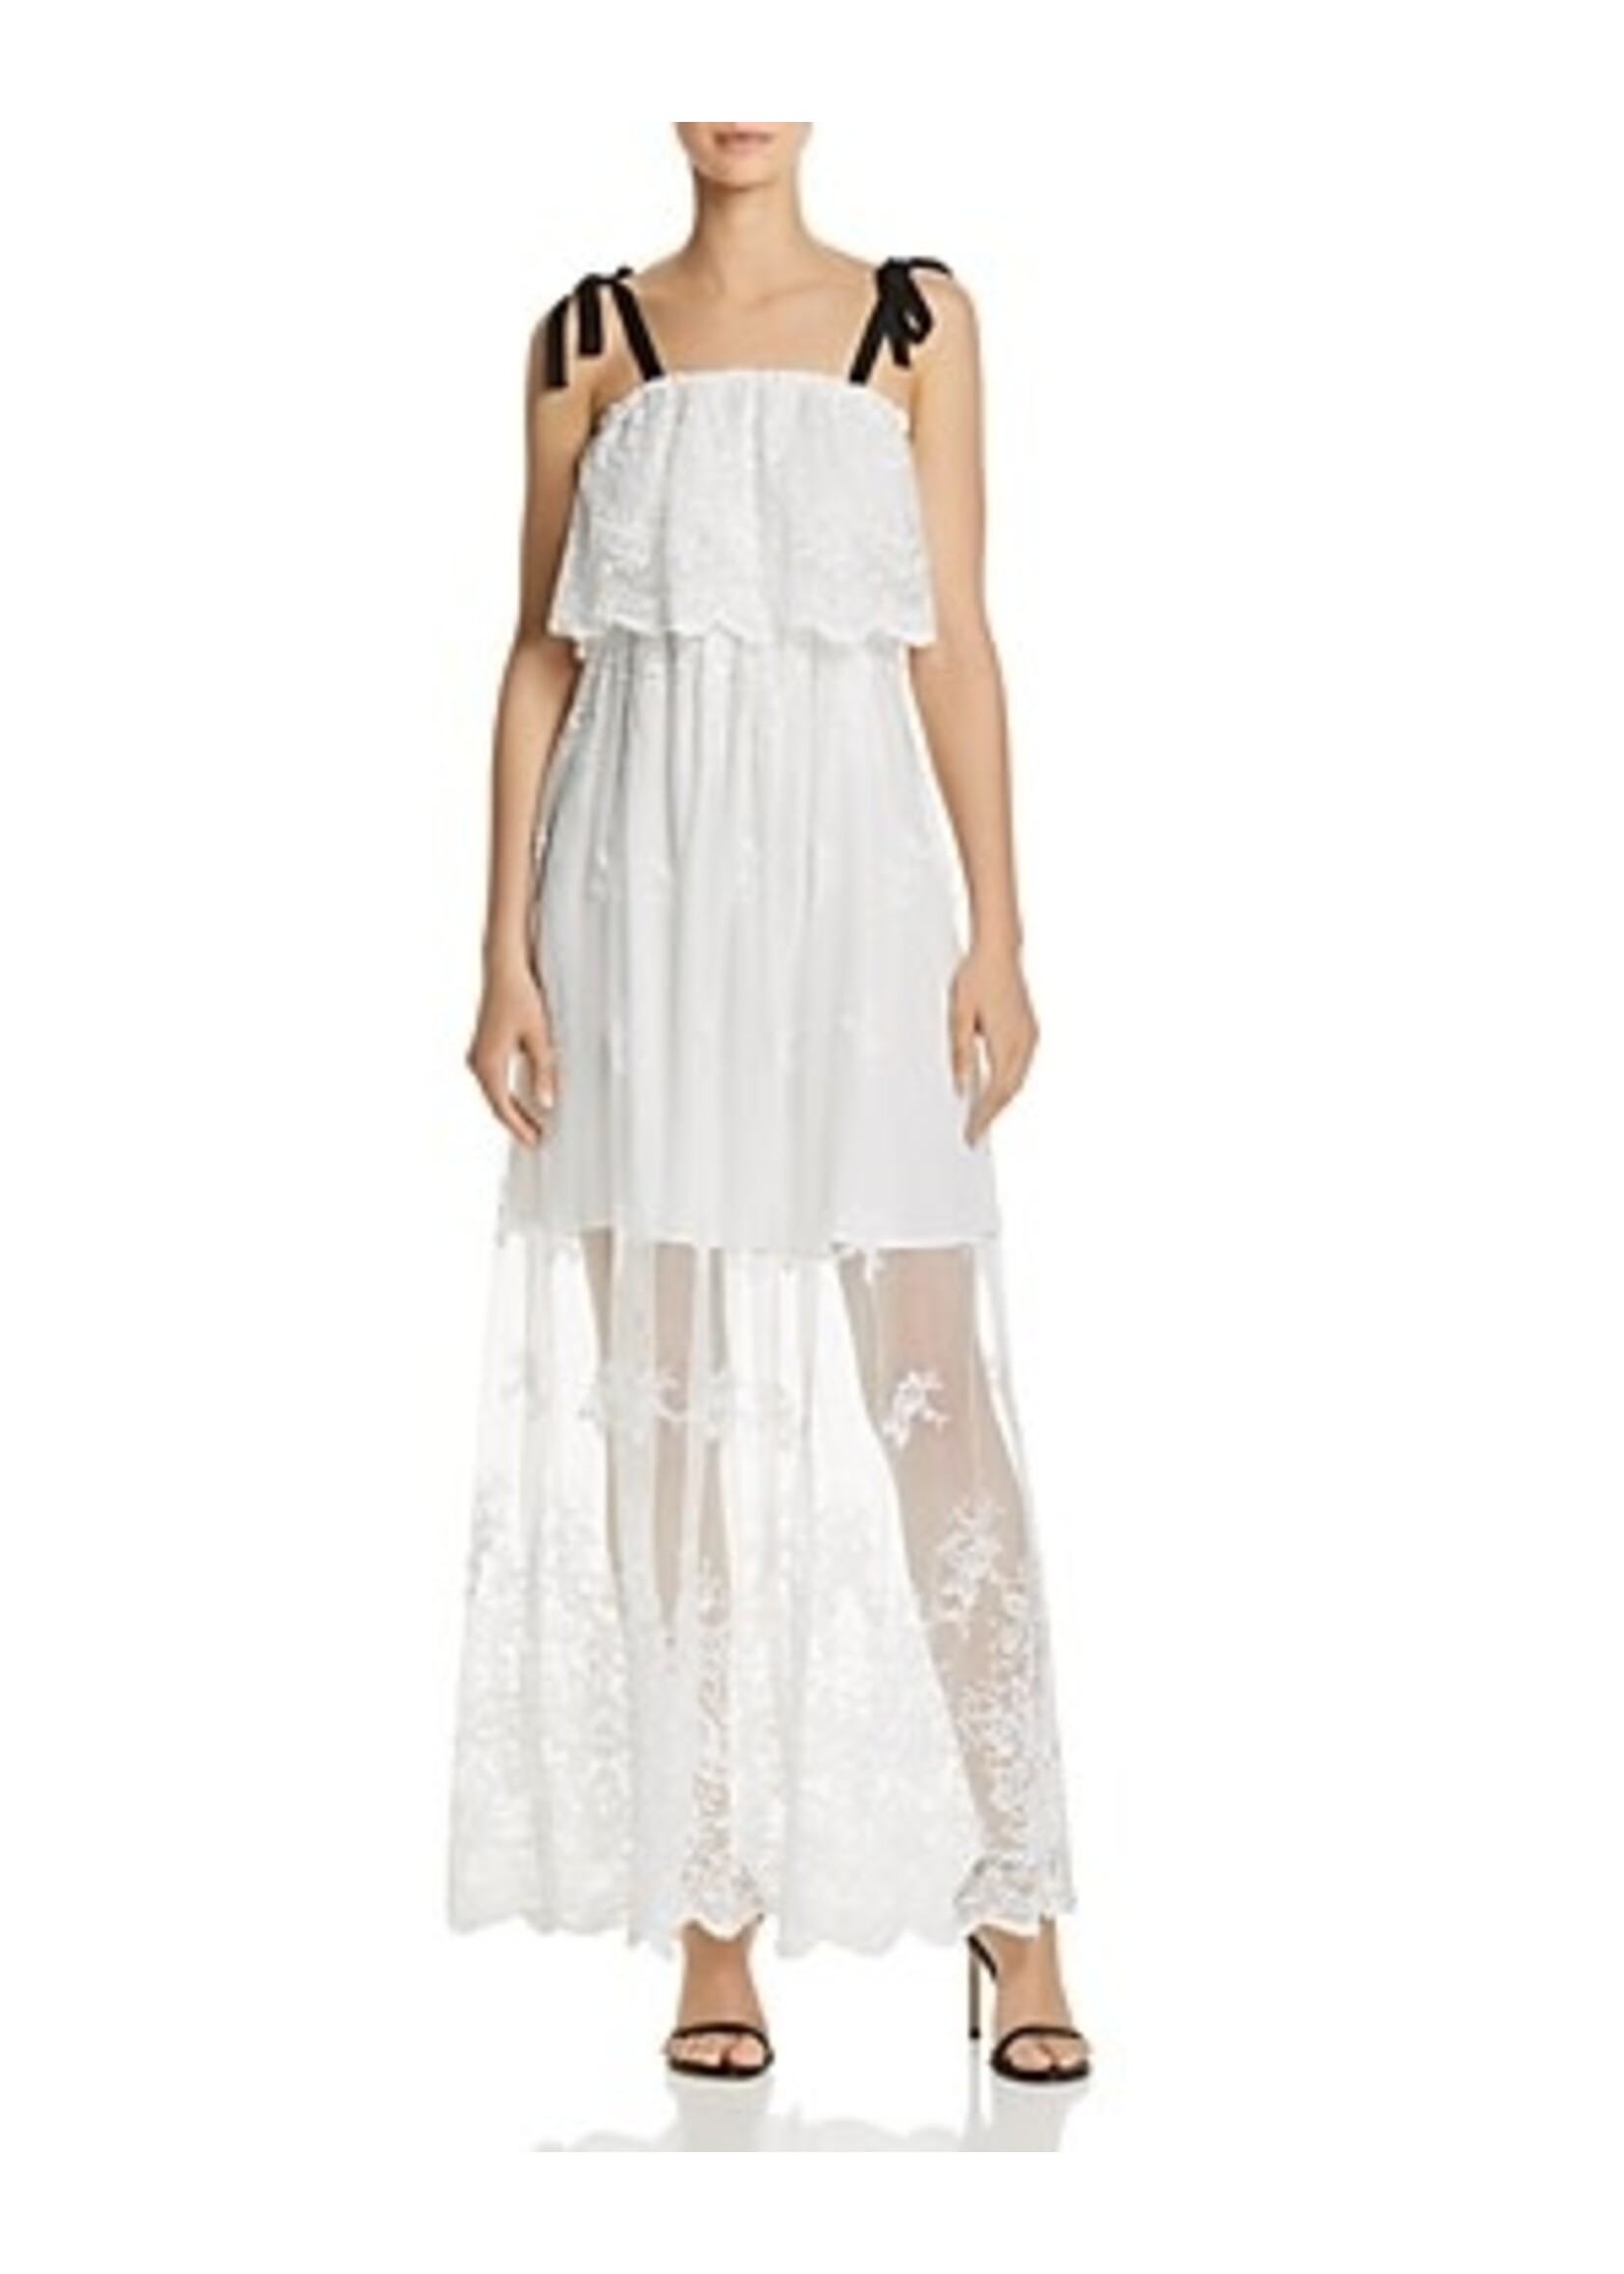 AQUA AQUA White Lace Maxi Dress, Small